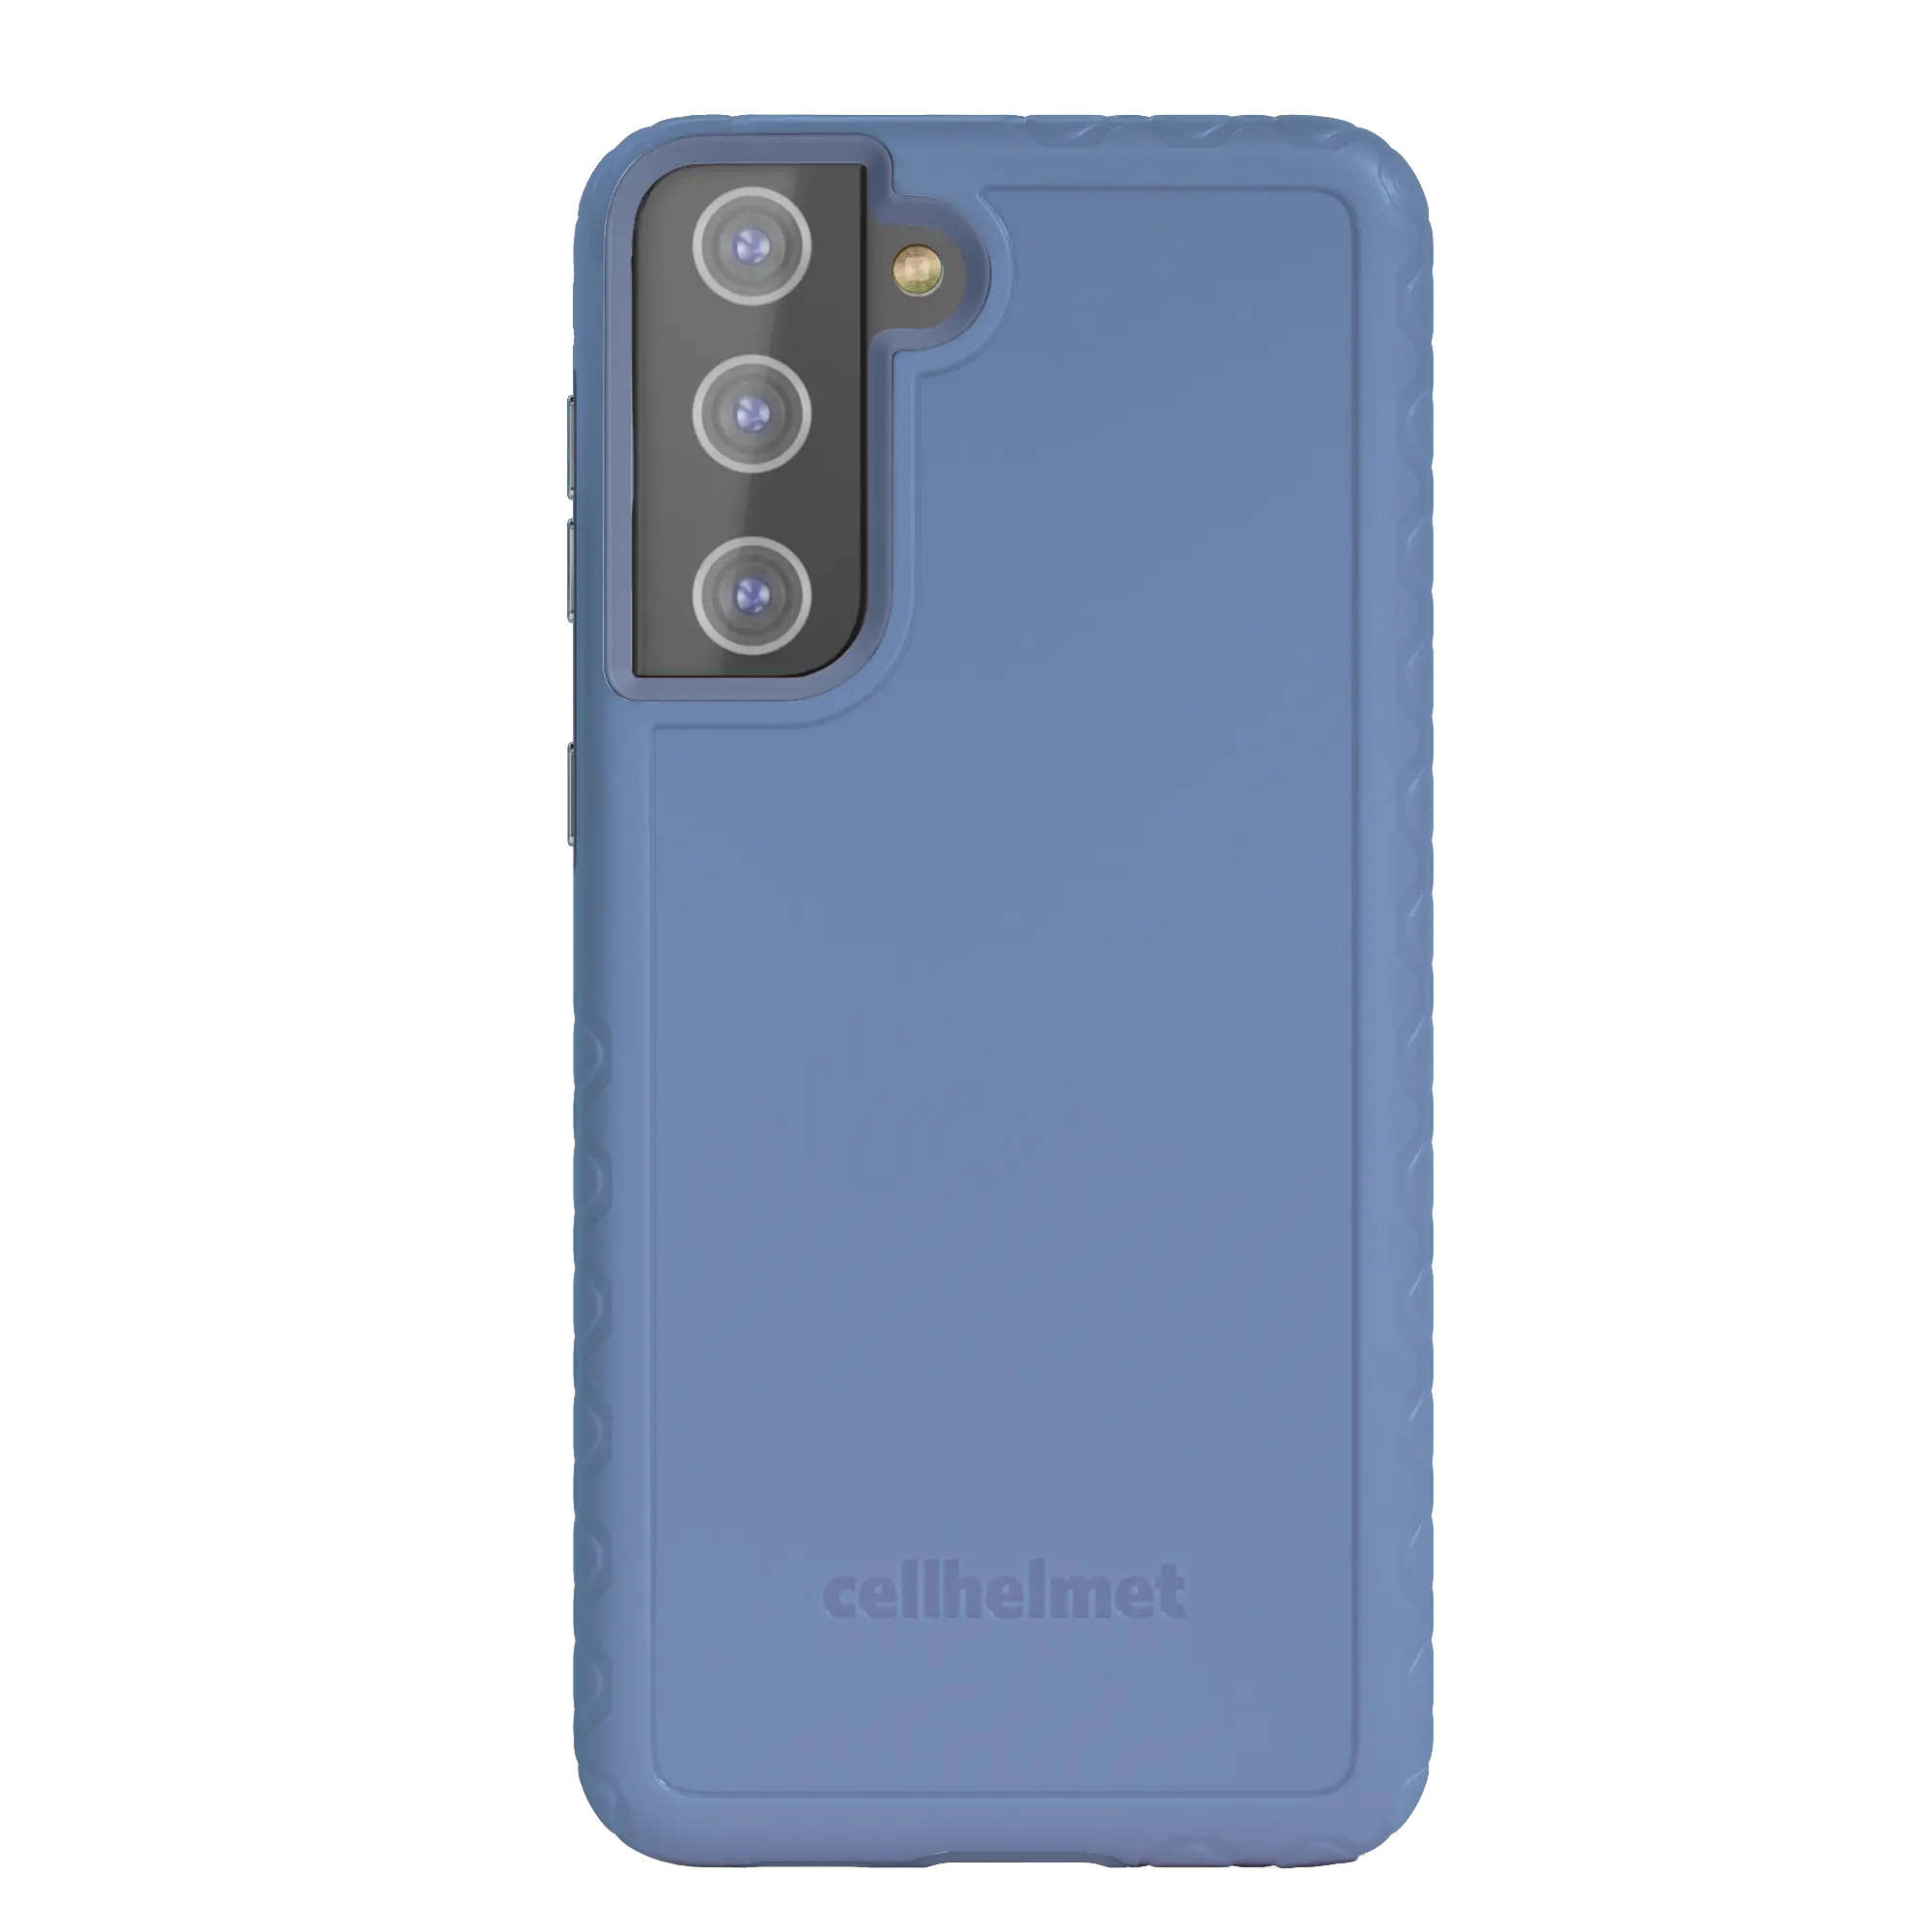 Blue cellhelmet Customizable Case for Galaxy S21